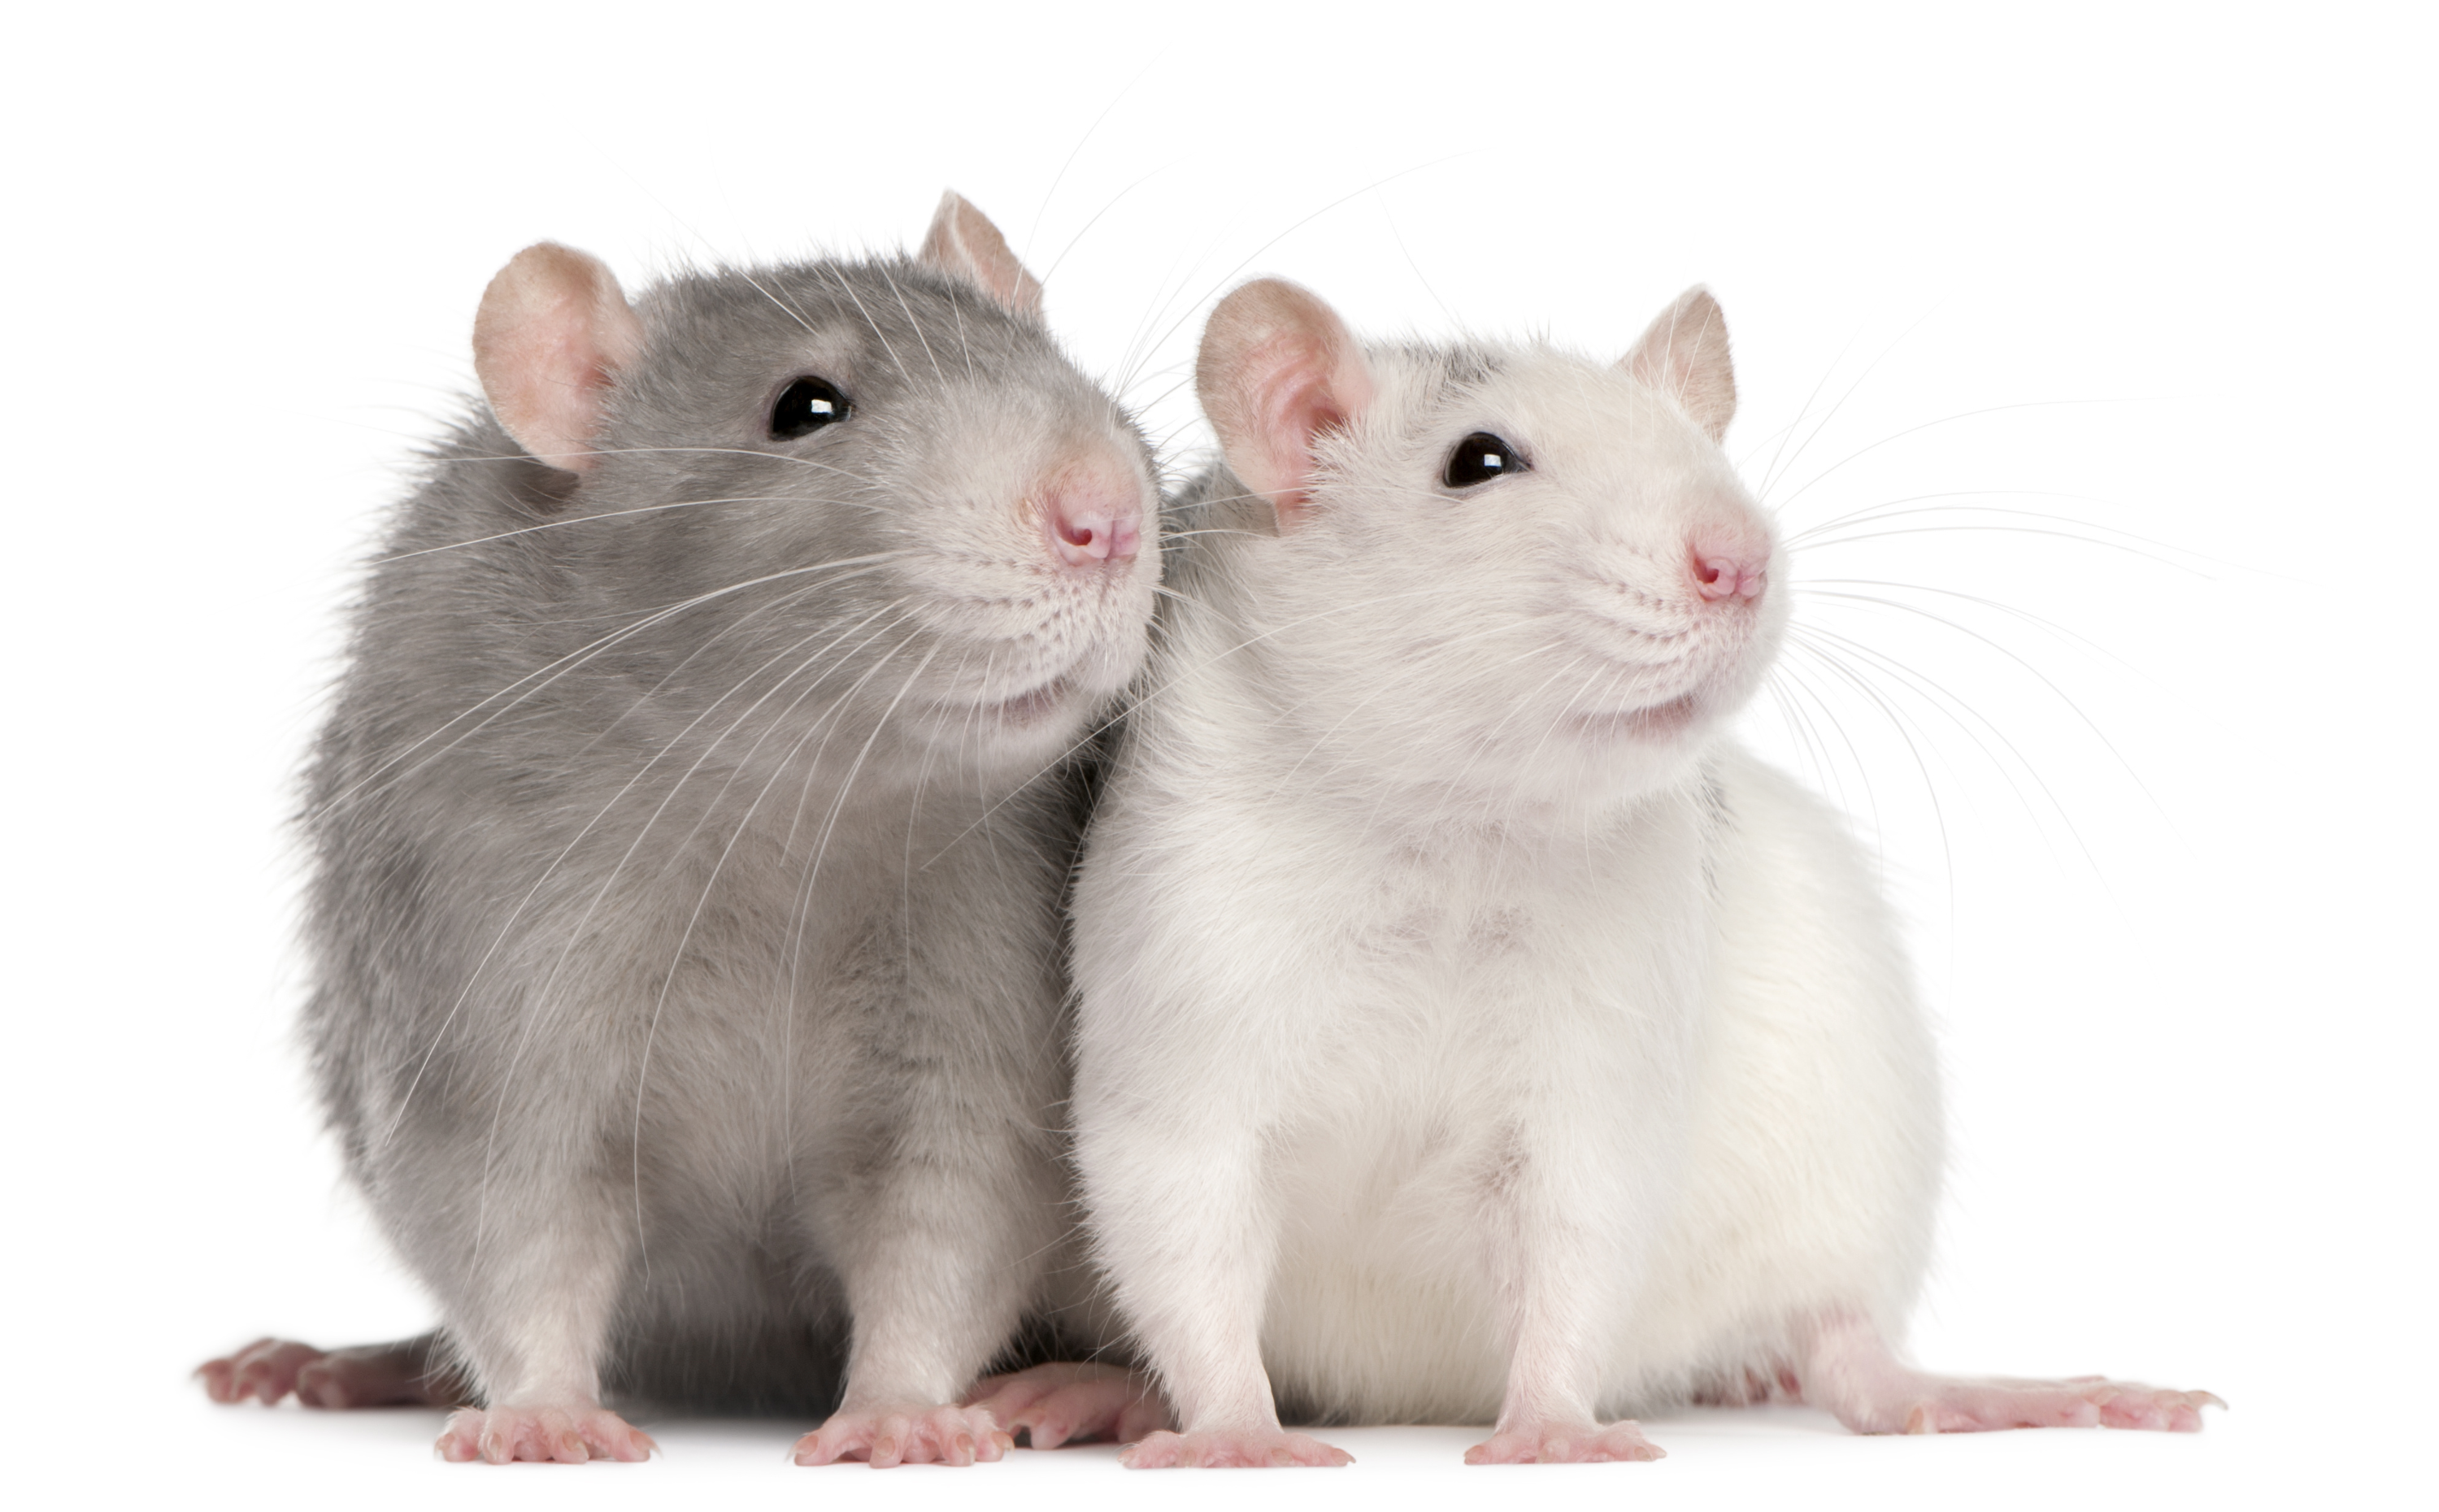 A grey rat sitting next to a white rat